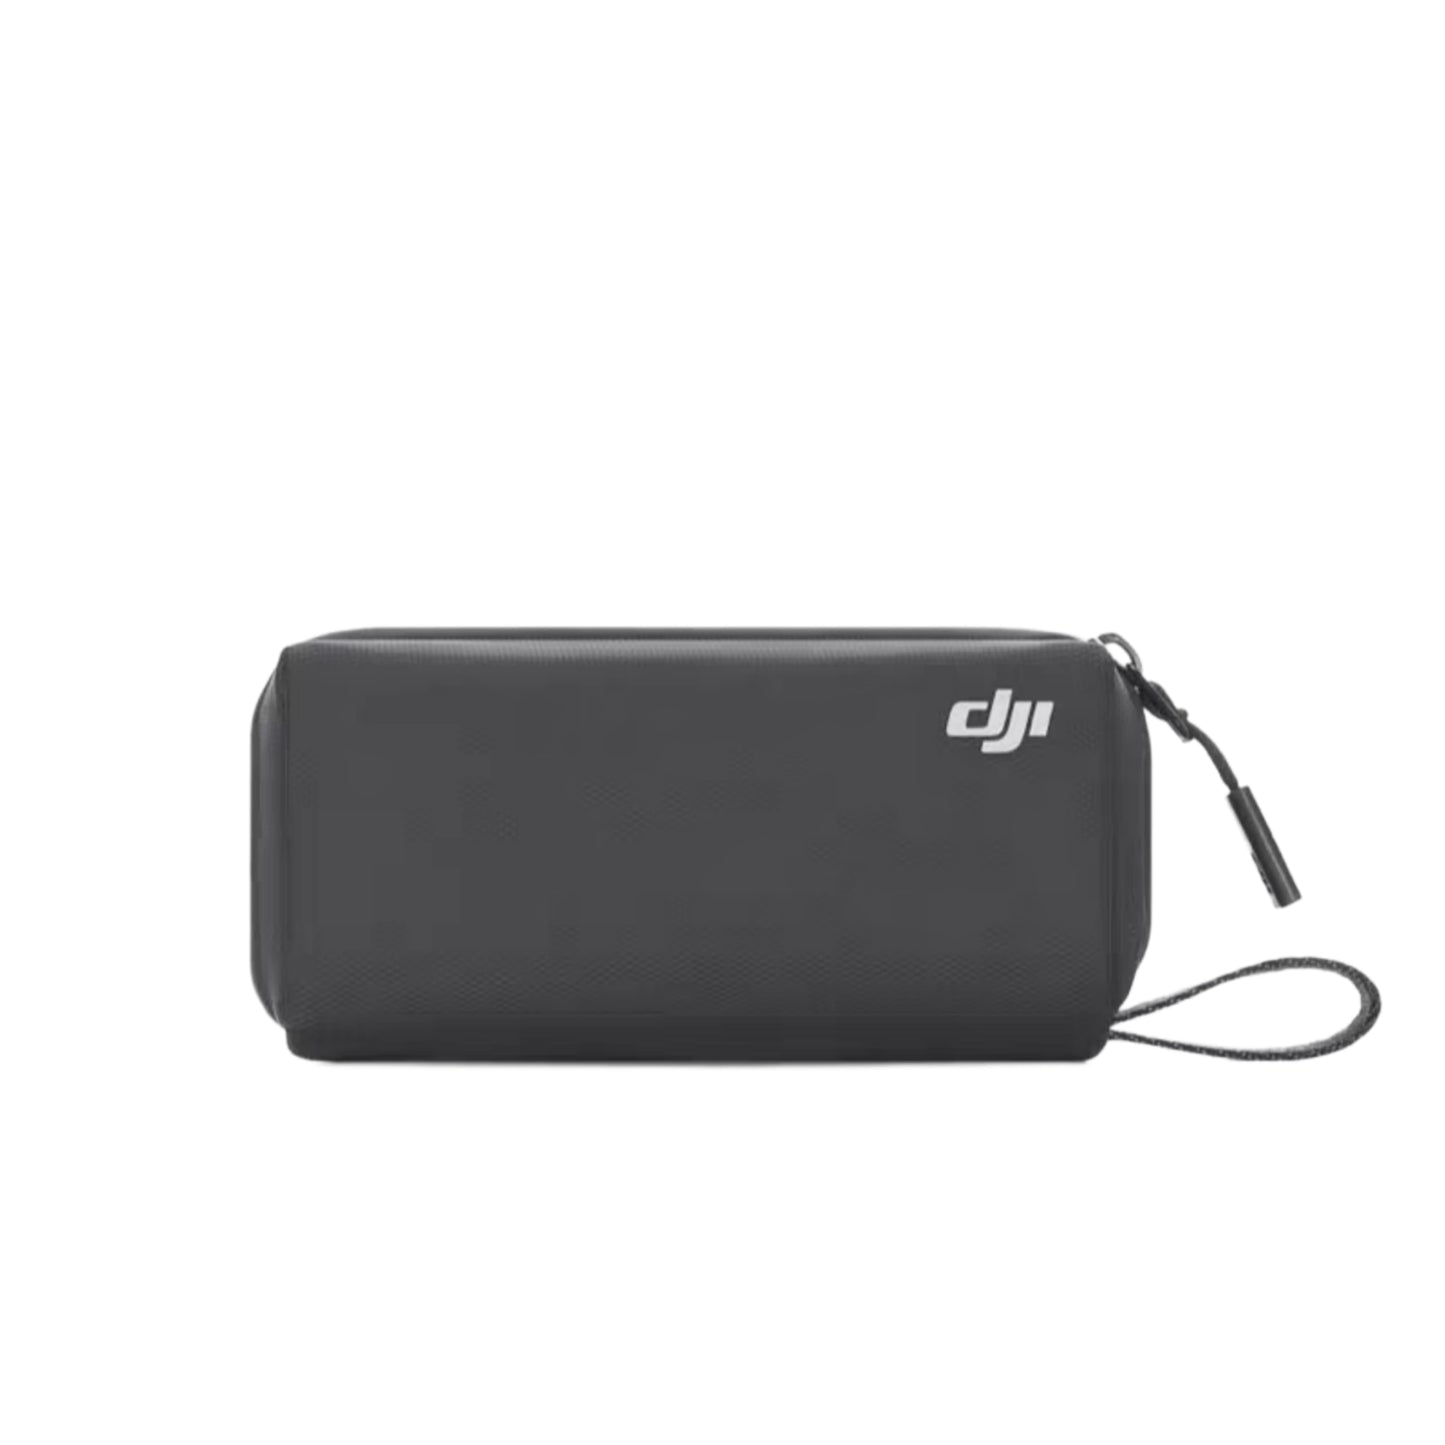 Carrying case Bag For DJI Osmo Pocket 1/2/3 Camera & Accessories Original Waterproof Compact Mini Case